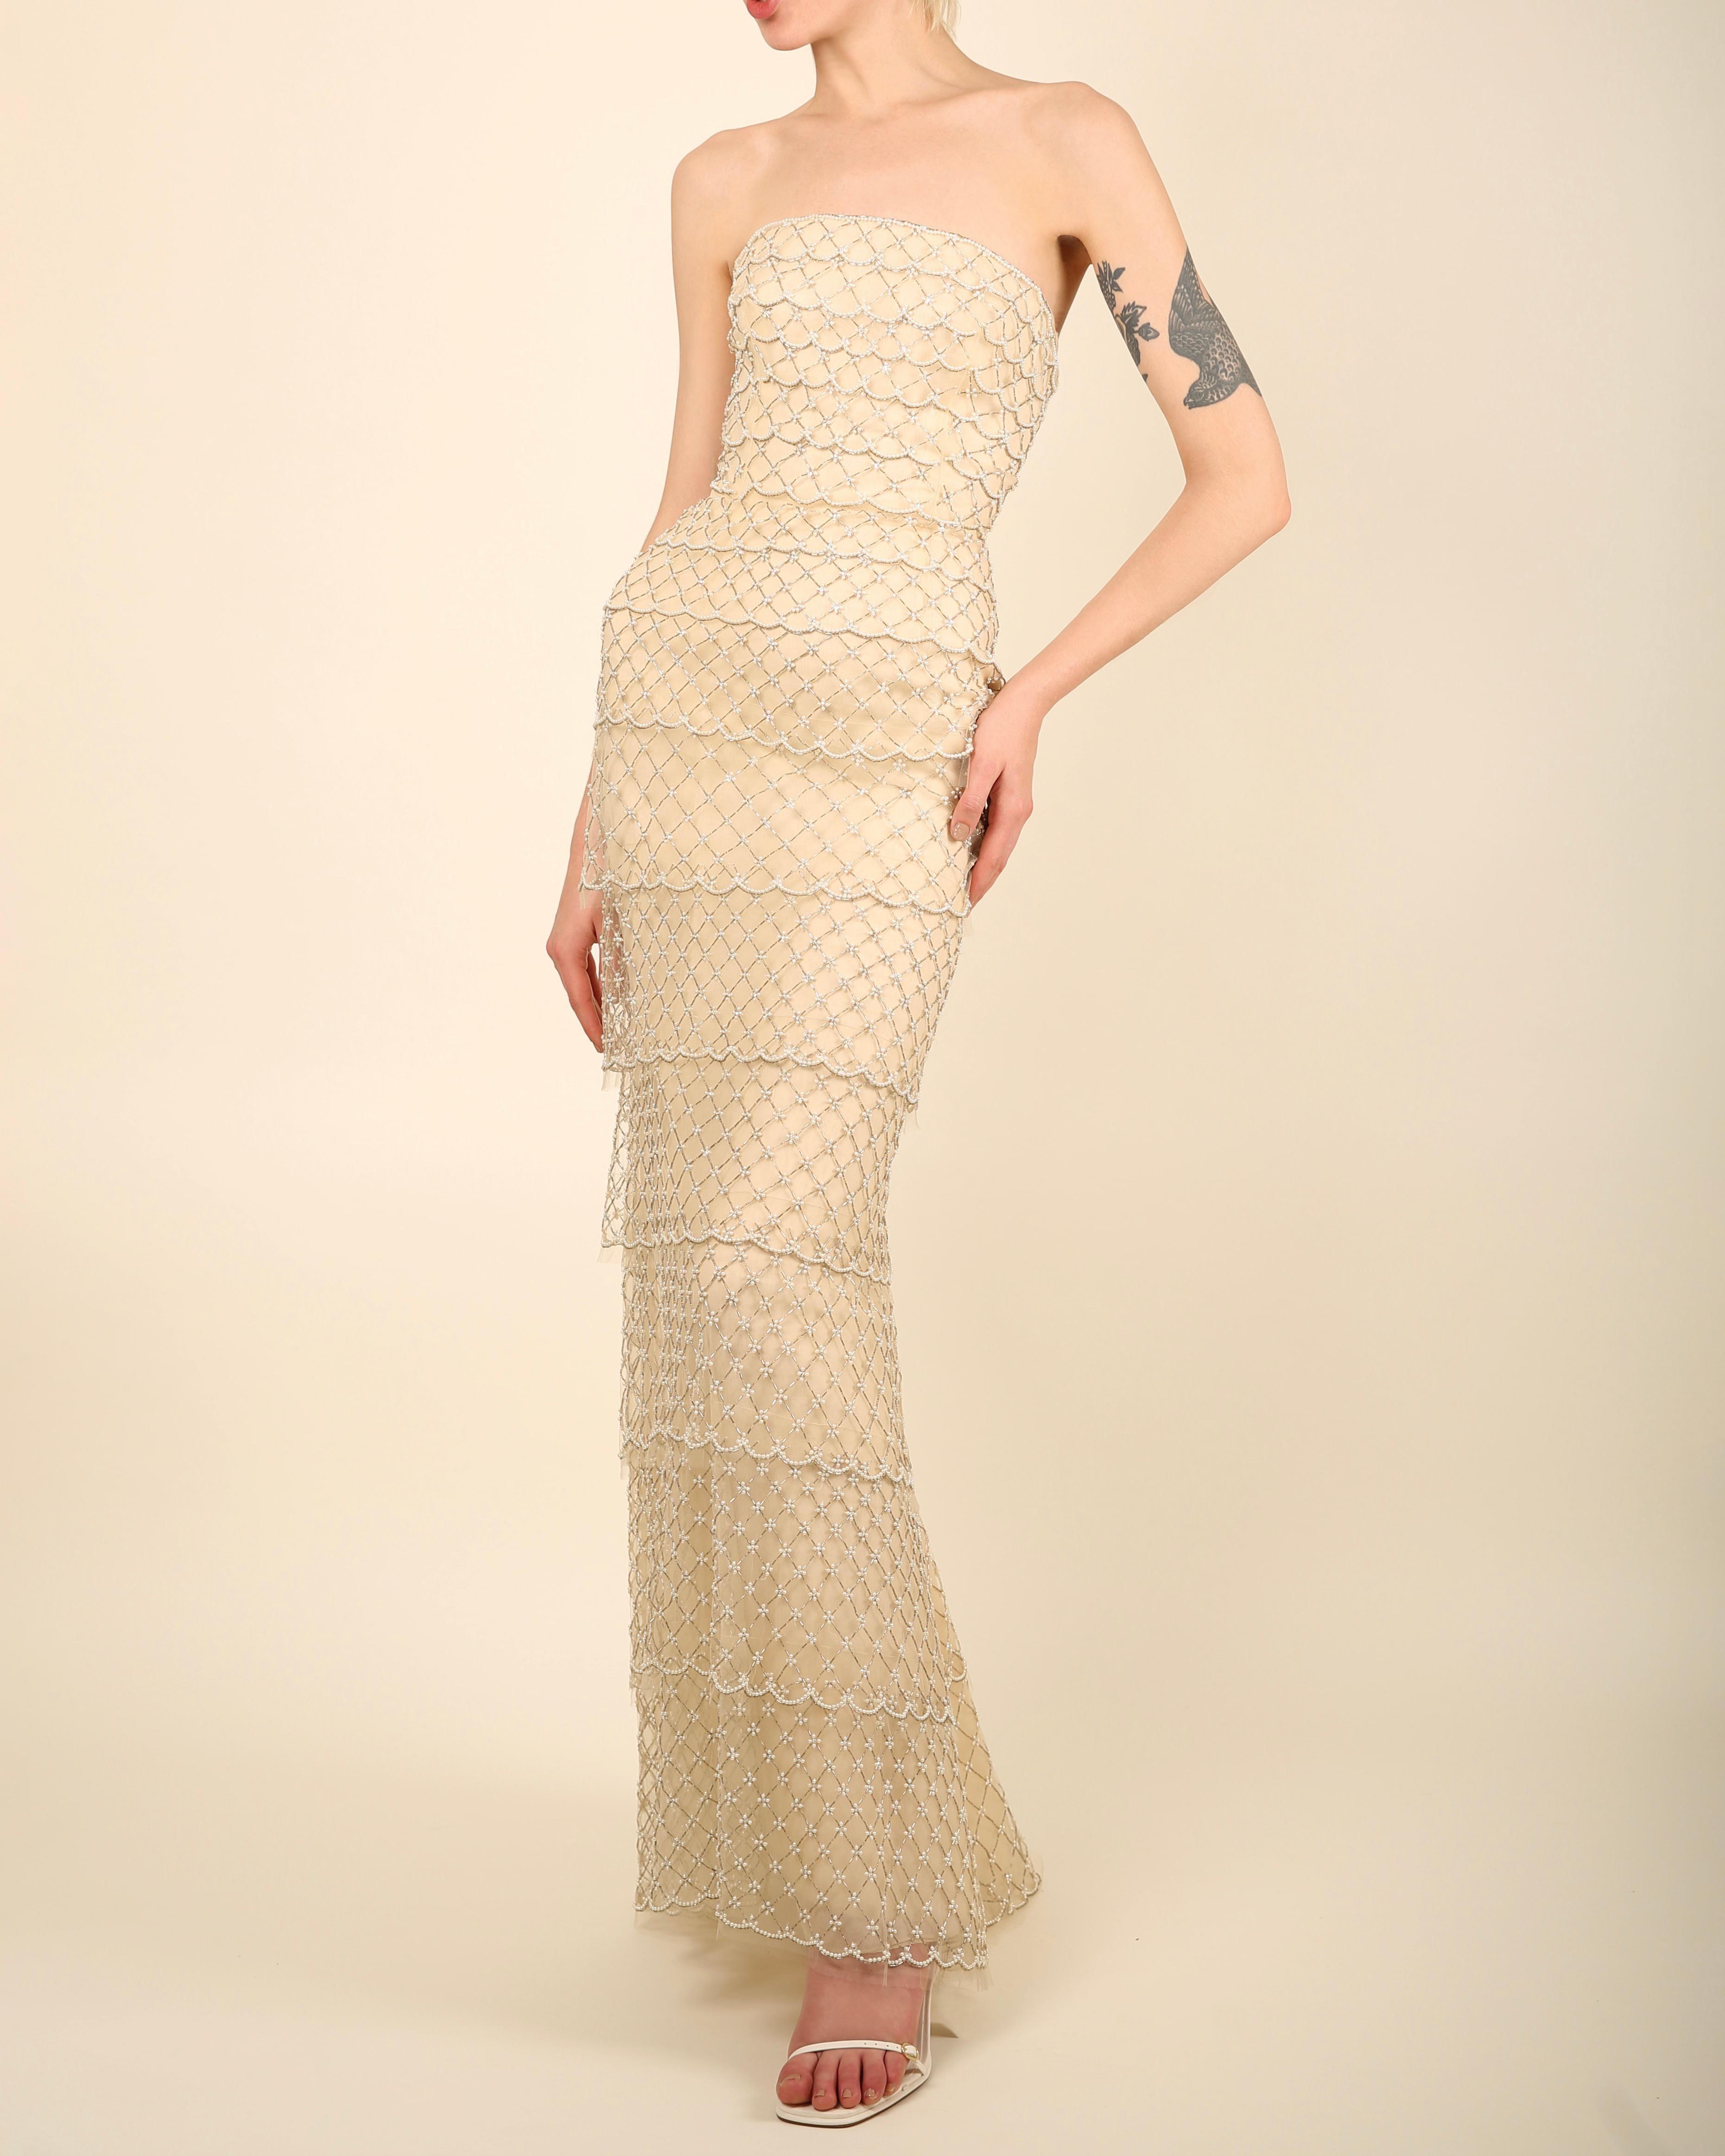 Oscar de la Renta S/S 2014 strapless tiered sheer mesh pearl wedding dress gown 2